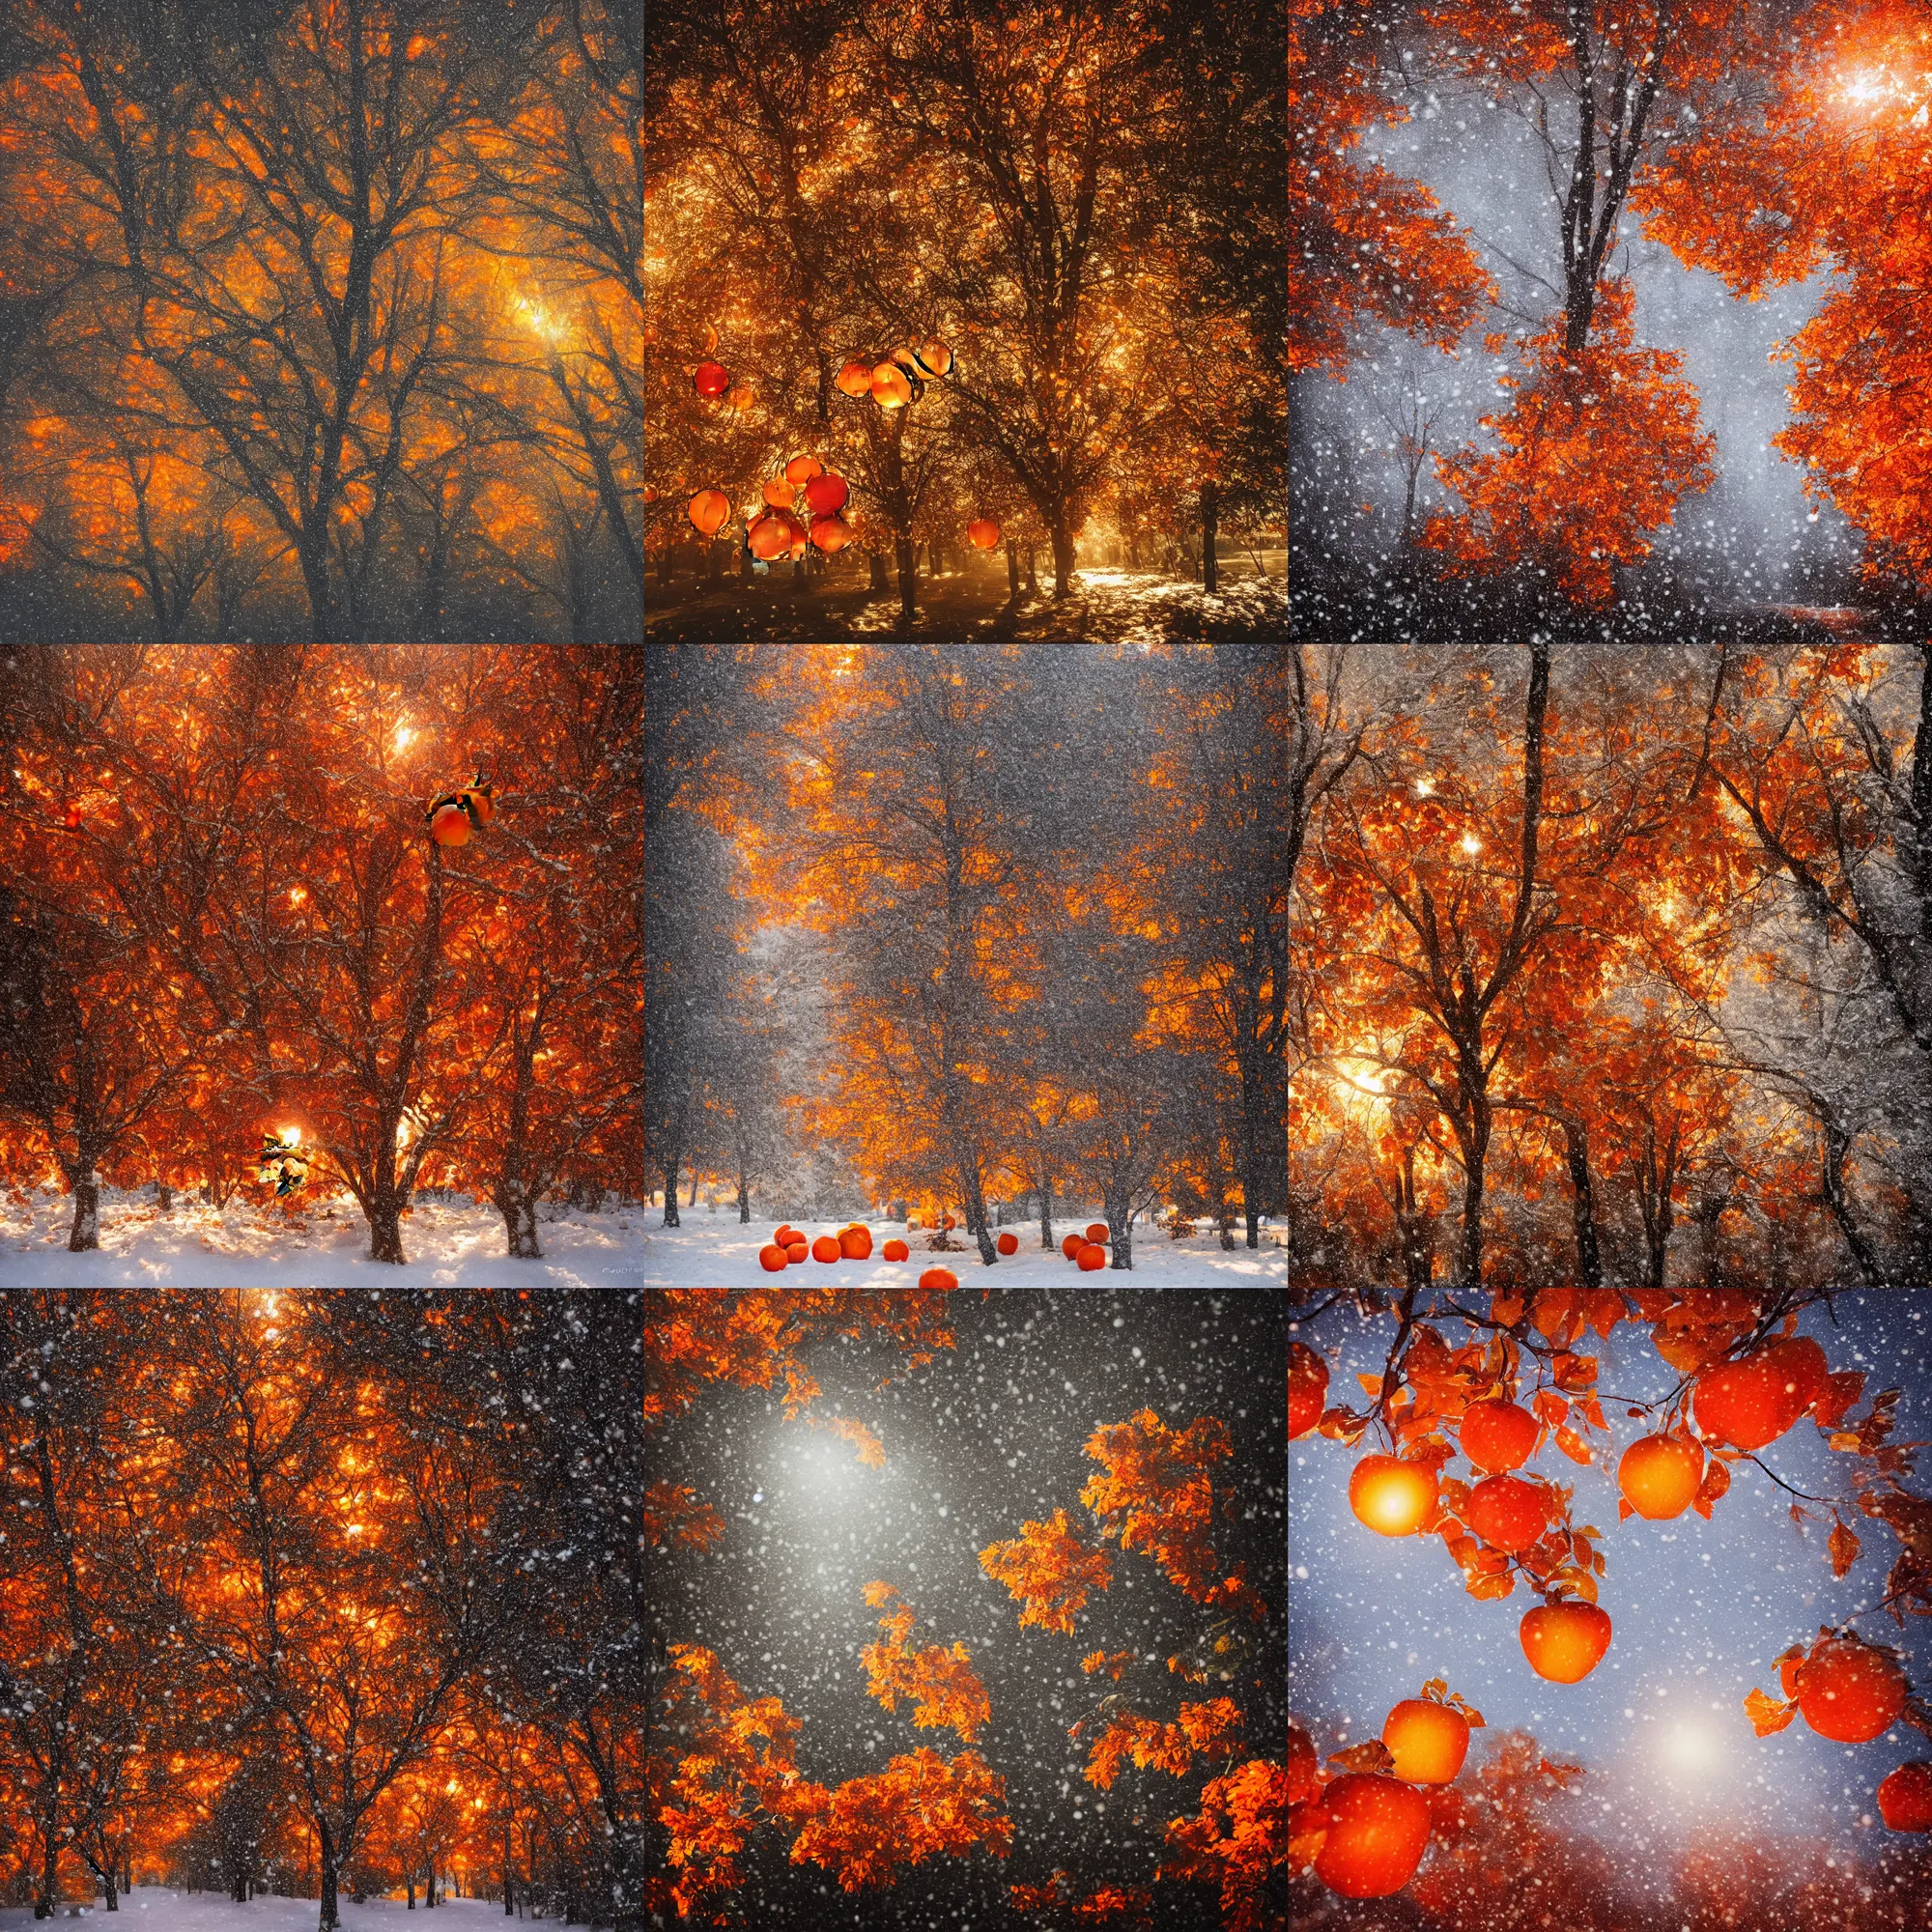 Prompt: the fall season, orange lighting, trees with apples, elegant, dramatic lighting, graphic art, volumetric lighting, sharp focus, detailed, snowing